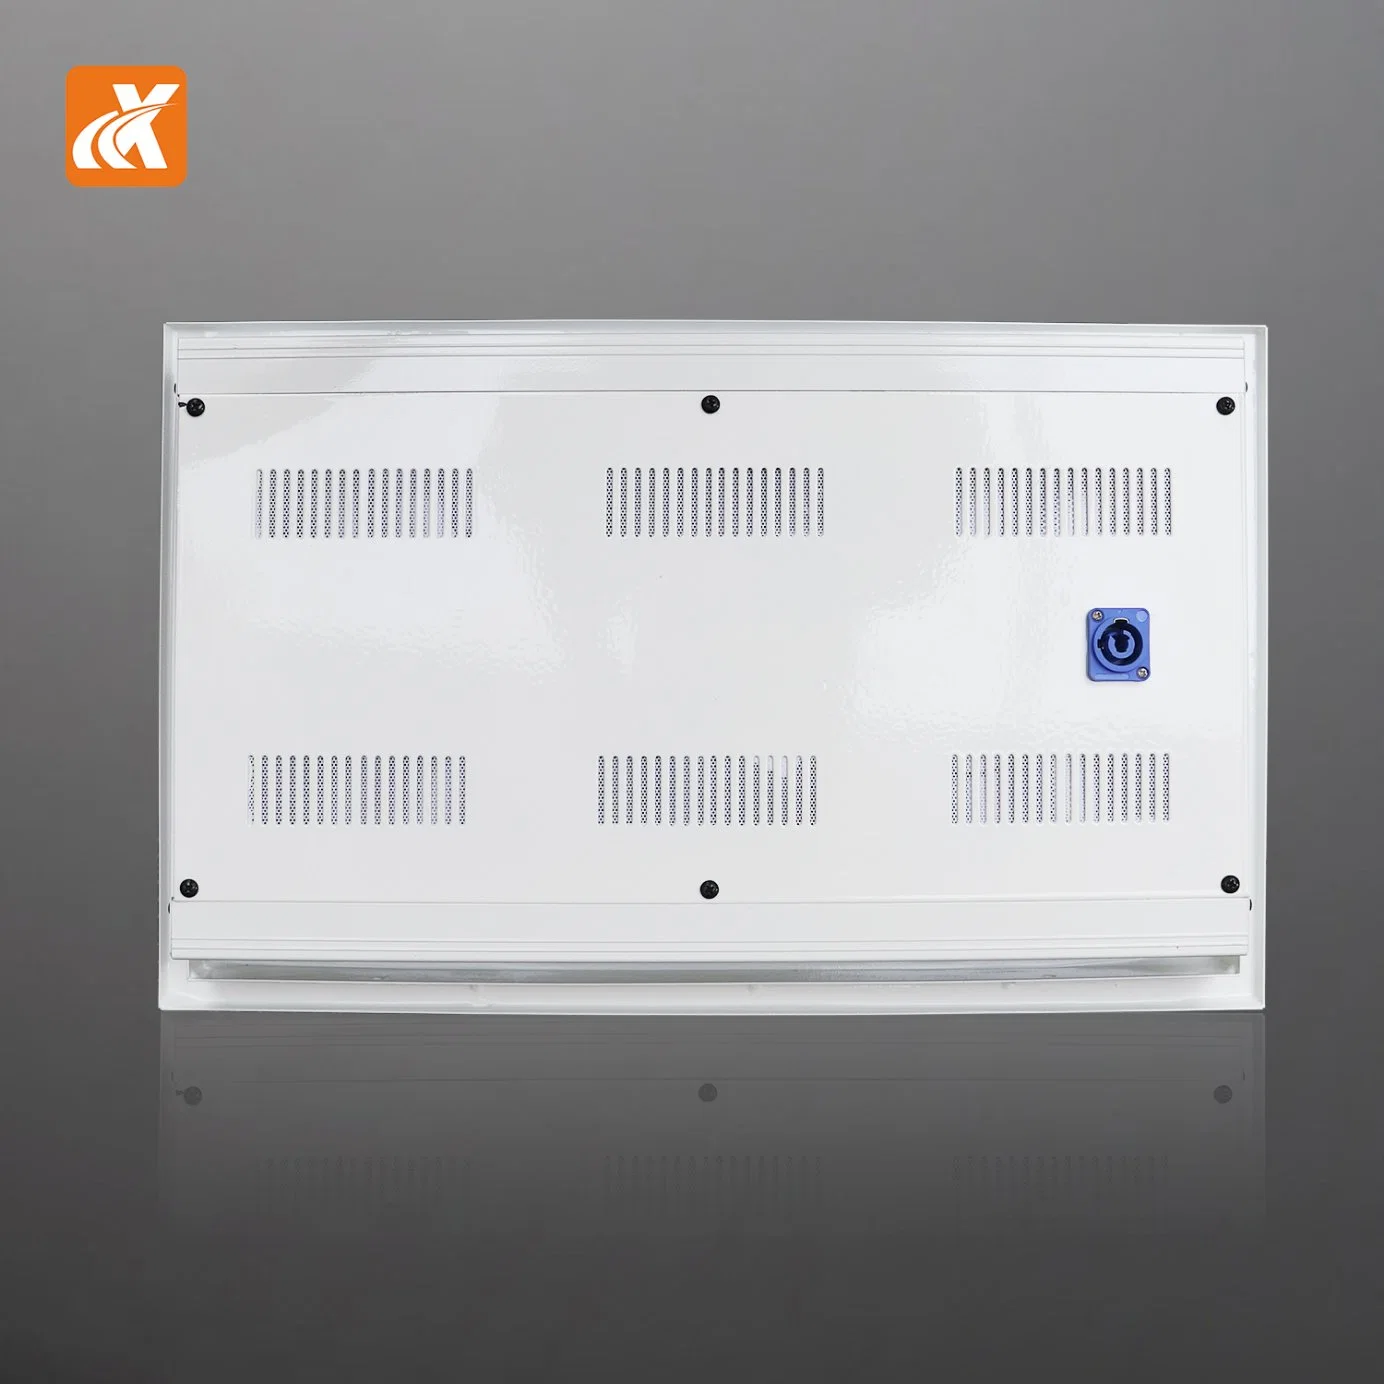 LED-Q100 بيع الساخنة المصنع السعر 100 واط DMX512 ضوء سطح داخلي لوحة LED مرحلة استوديو الضوء غرفة الاجتماعات هيئة البث المصباح